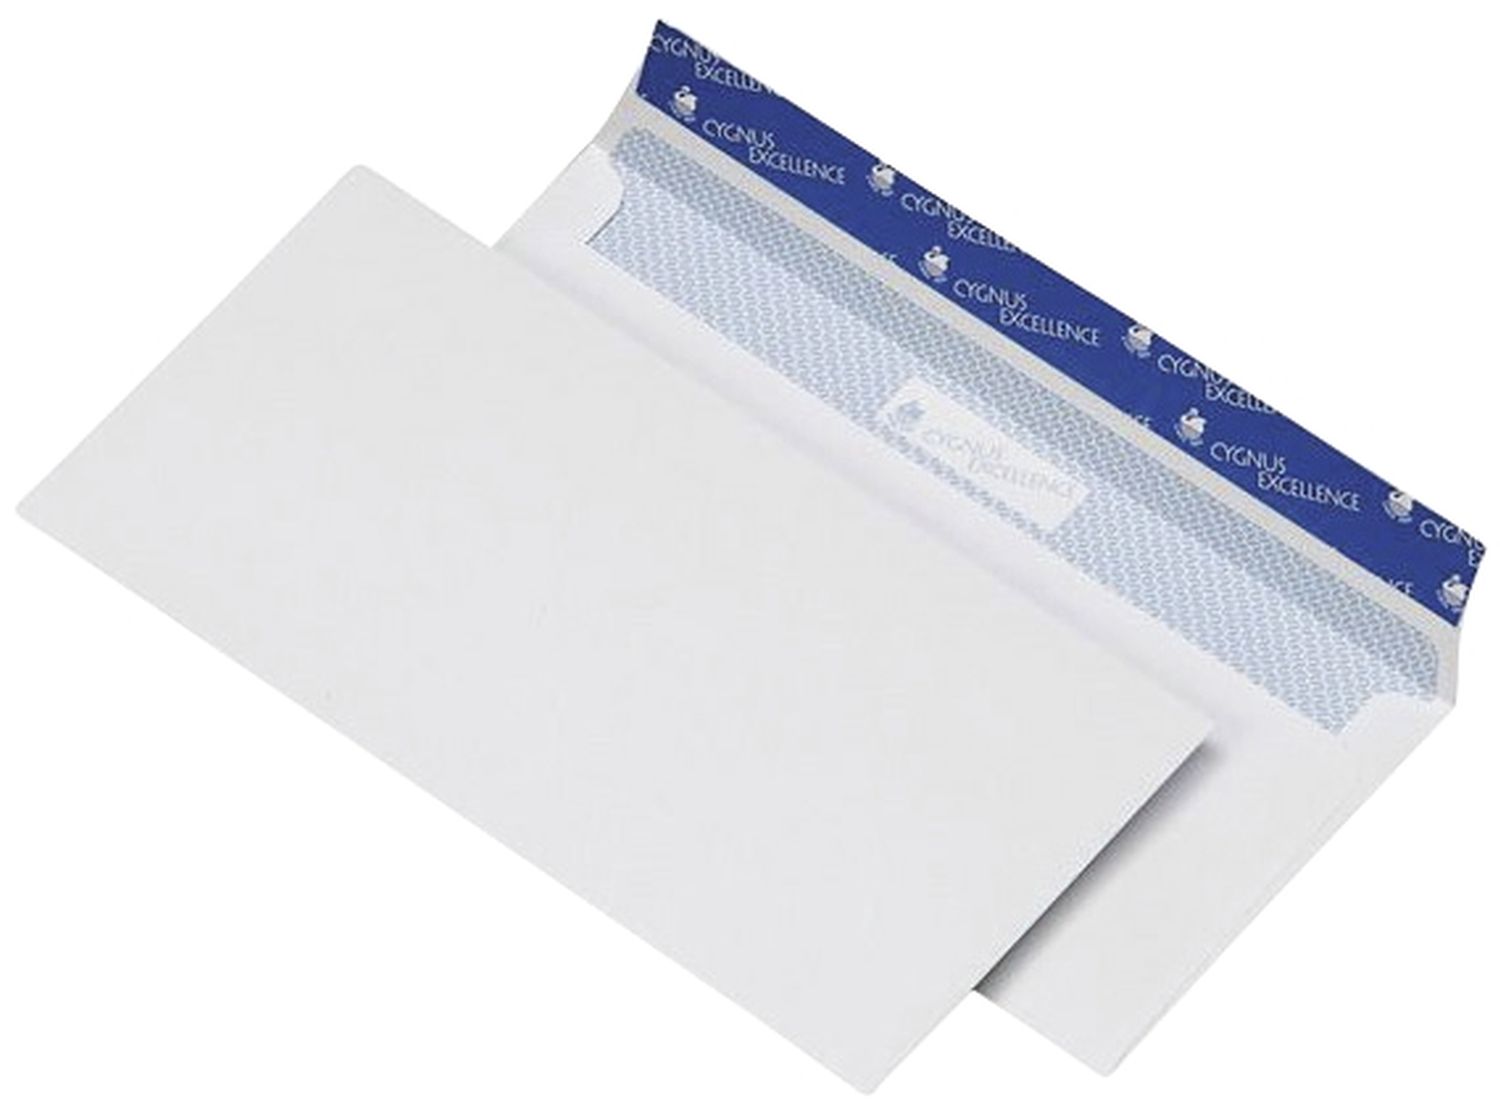 Briefumschlag Cygnus Excellence 30005442, DIN lang (220x110 mm), haftkebend, weiß, Offset 100g, 500 Stück